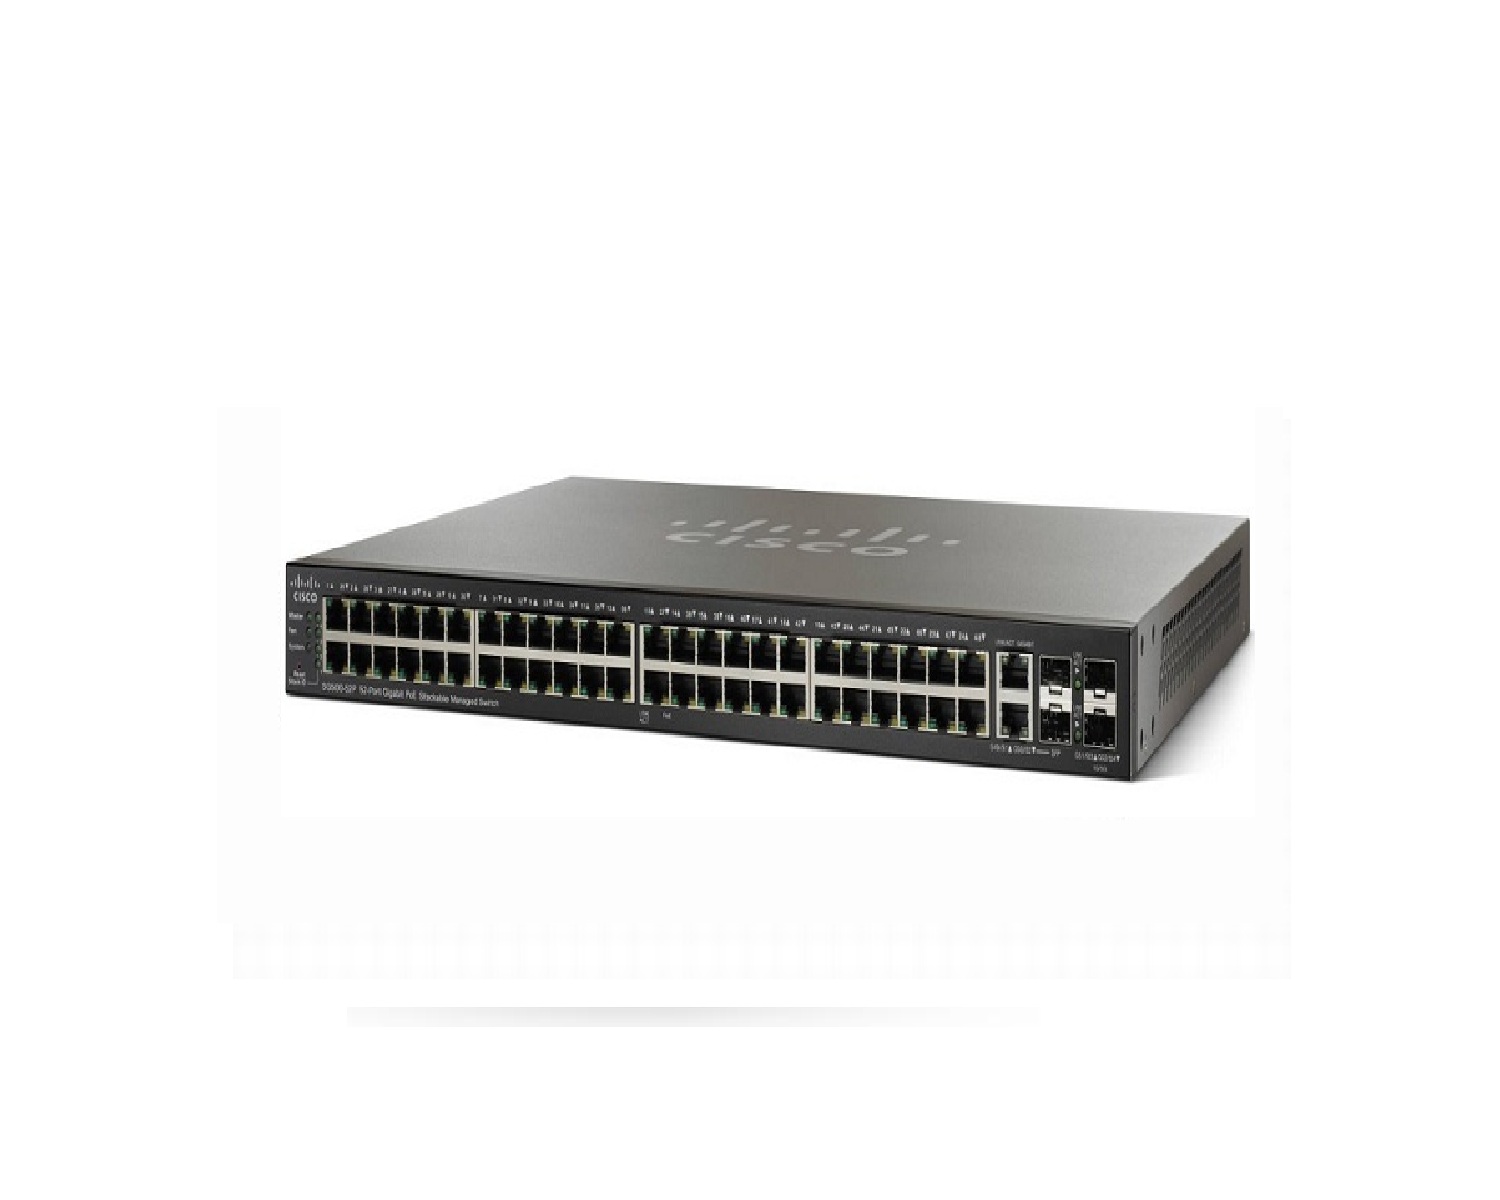 Switch Cisco SG500-52P-K9-G5-52-Port Gigabit PoE Stackable Managed